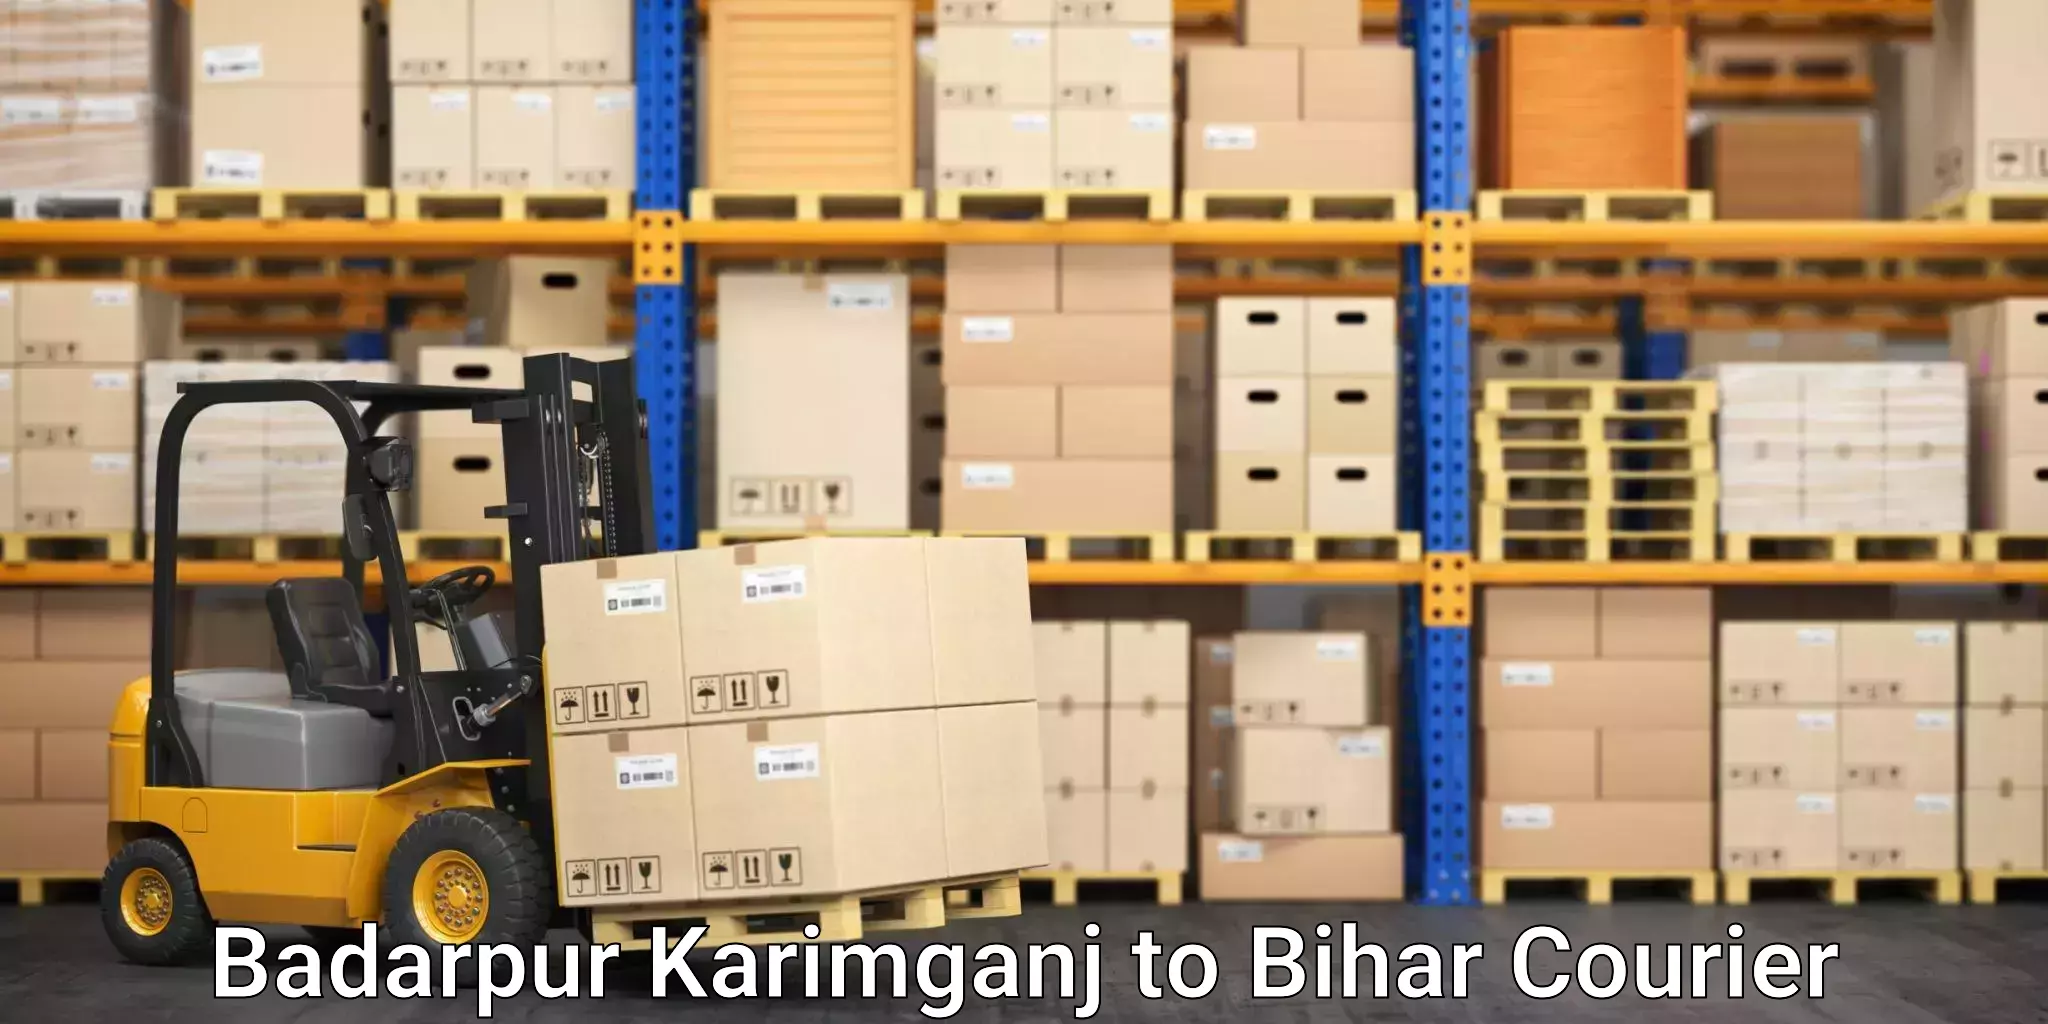 Same-day delivery solutions Badarpur Karimganj to Saran